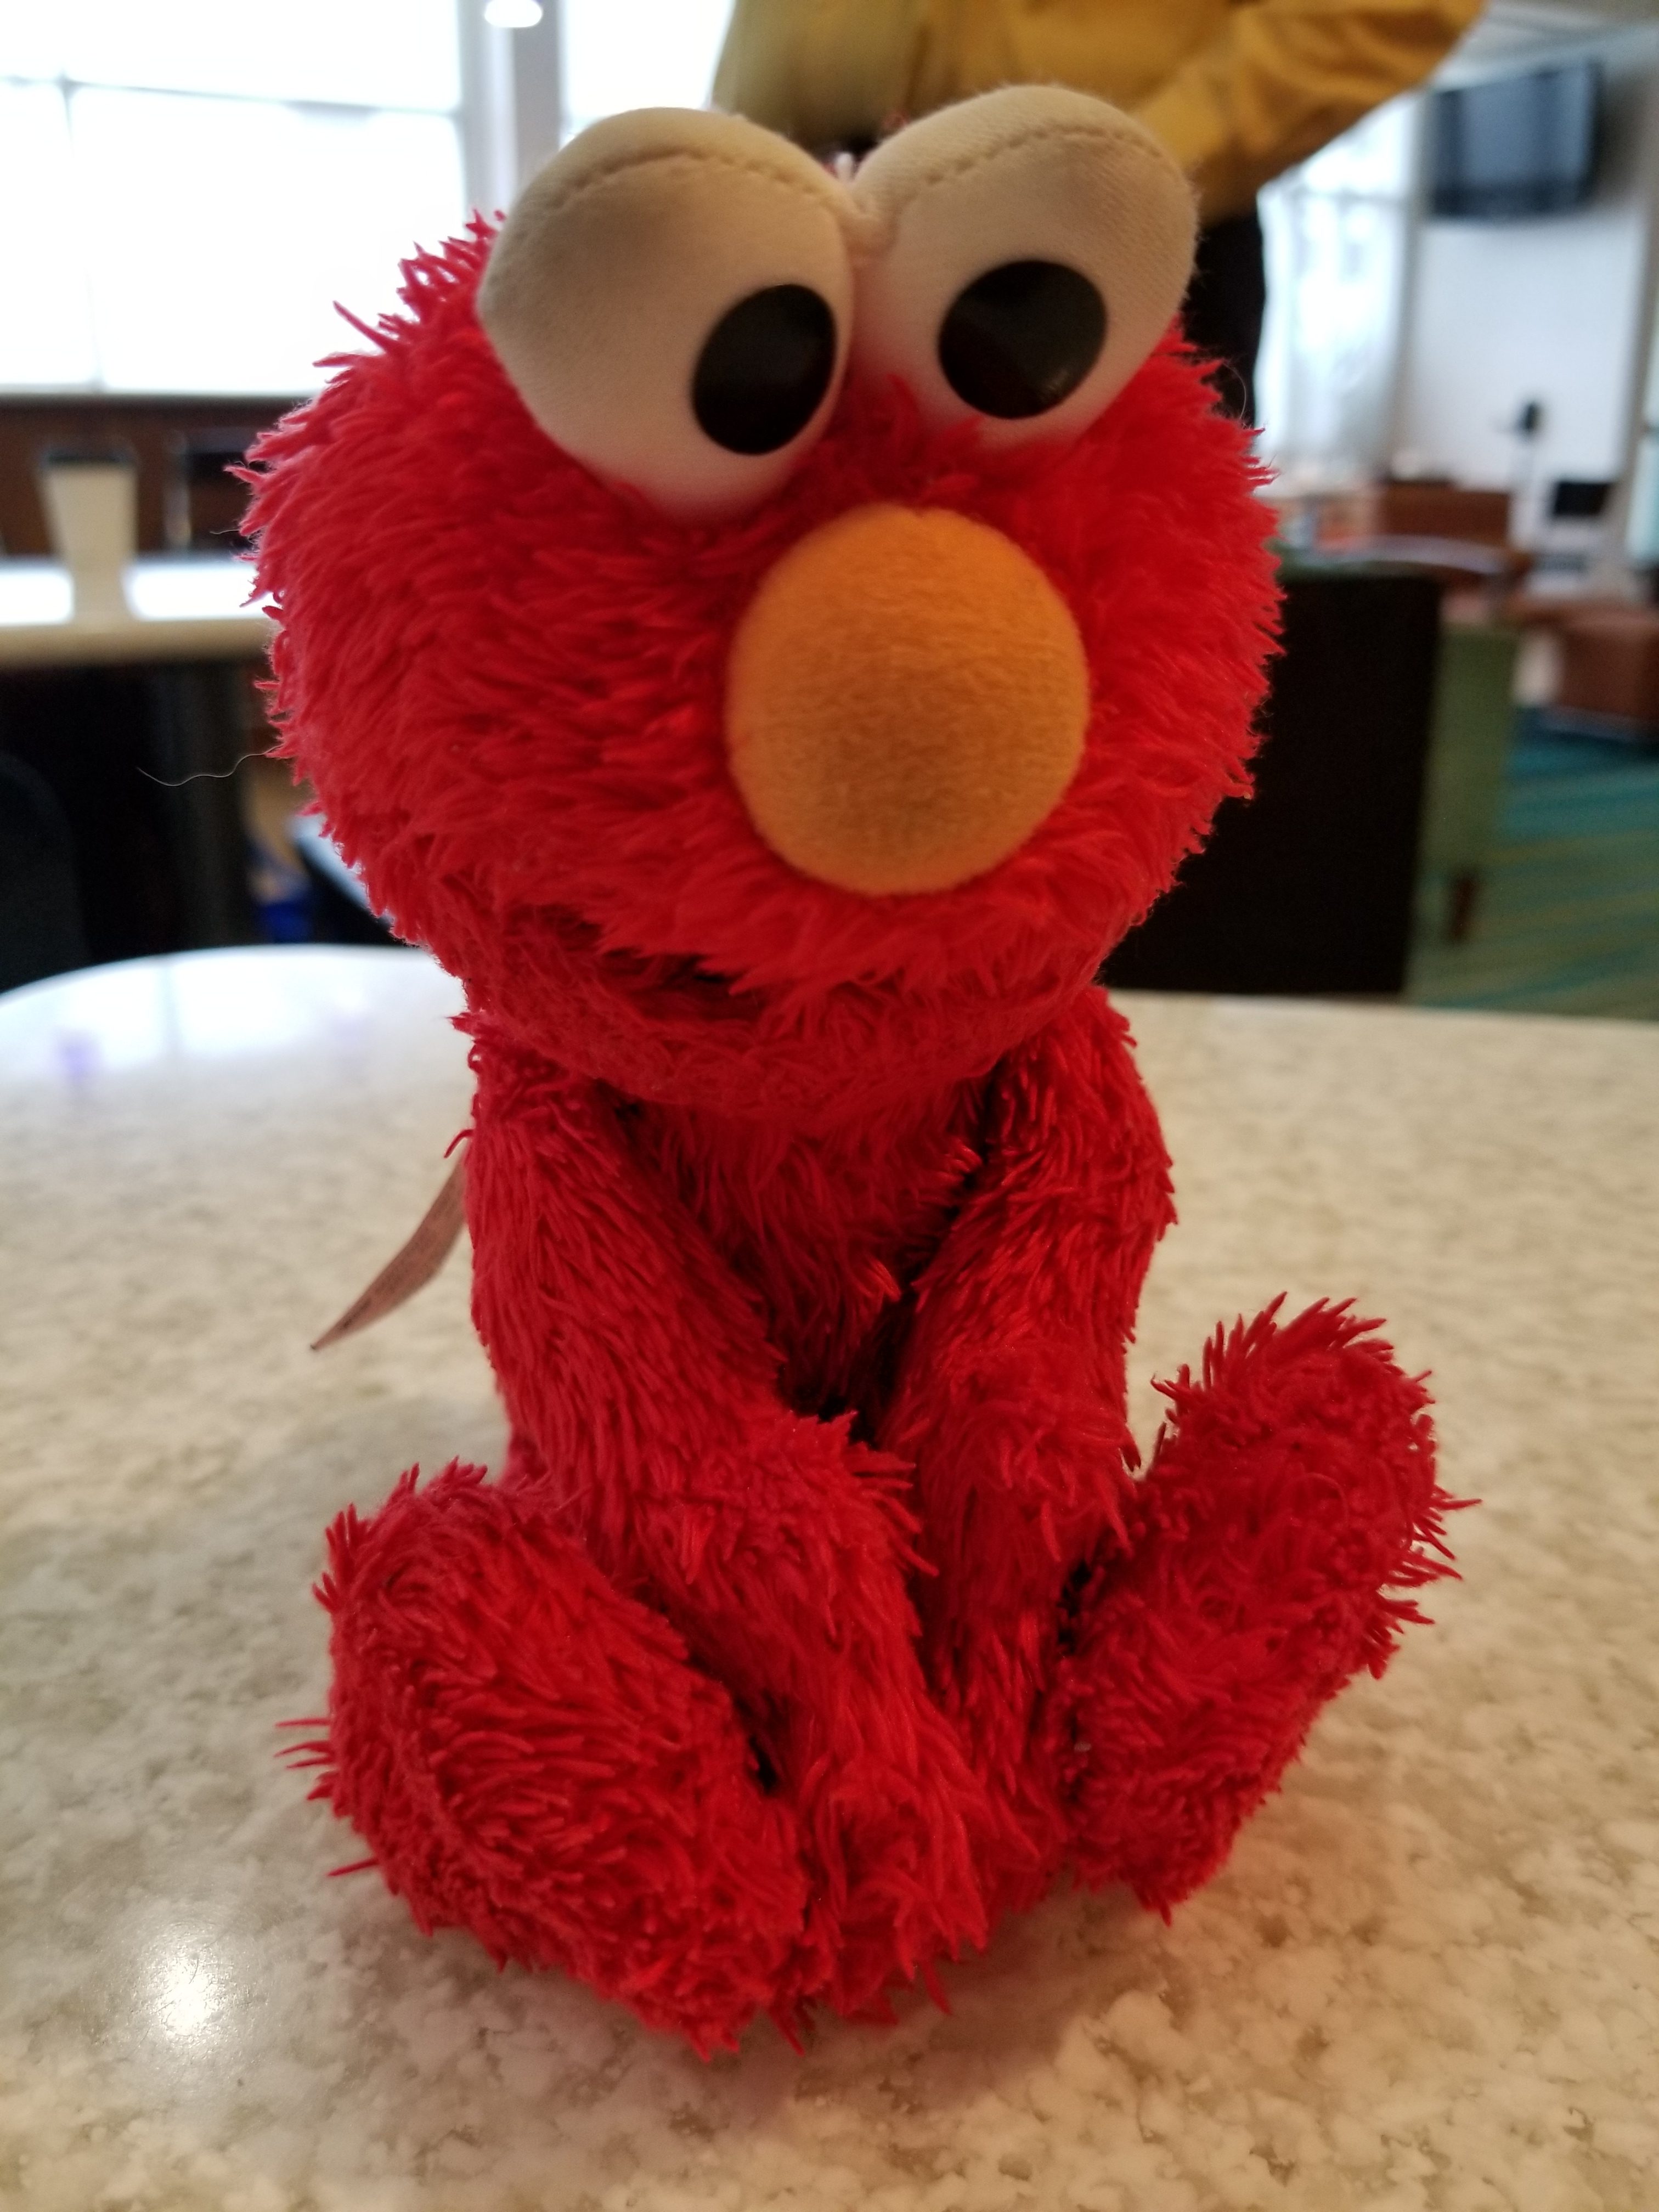 Elmo checks out of the Hotel